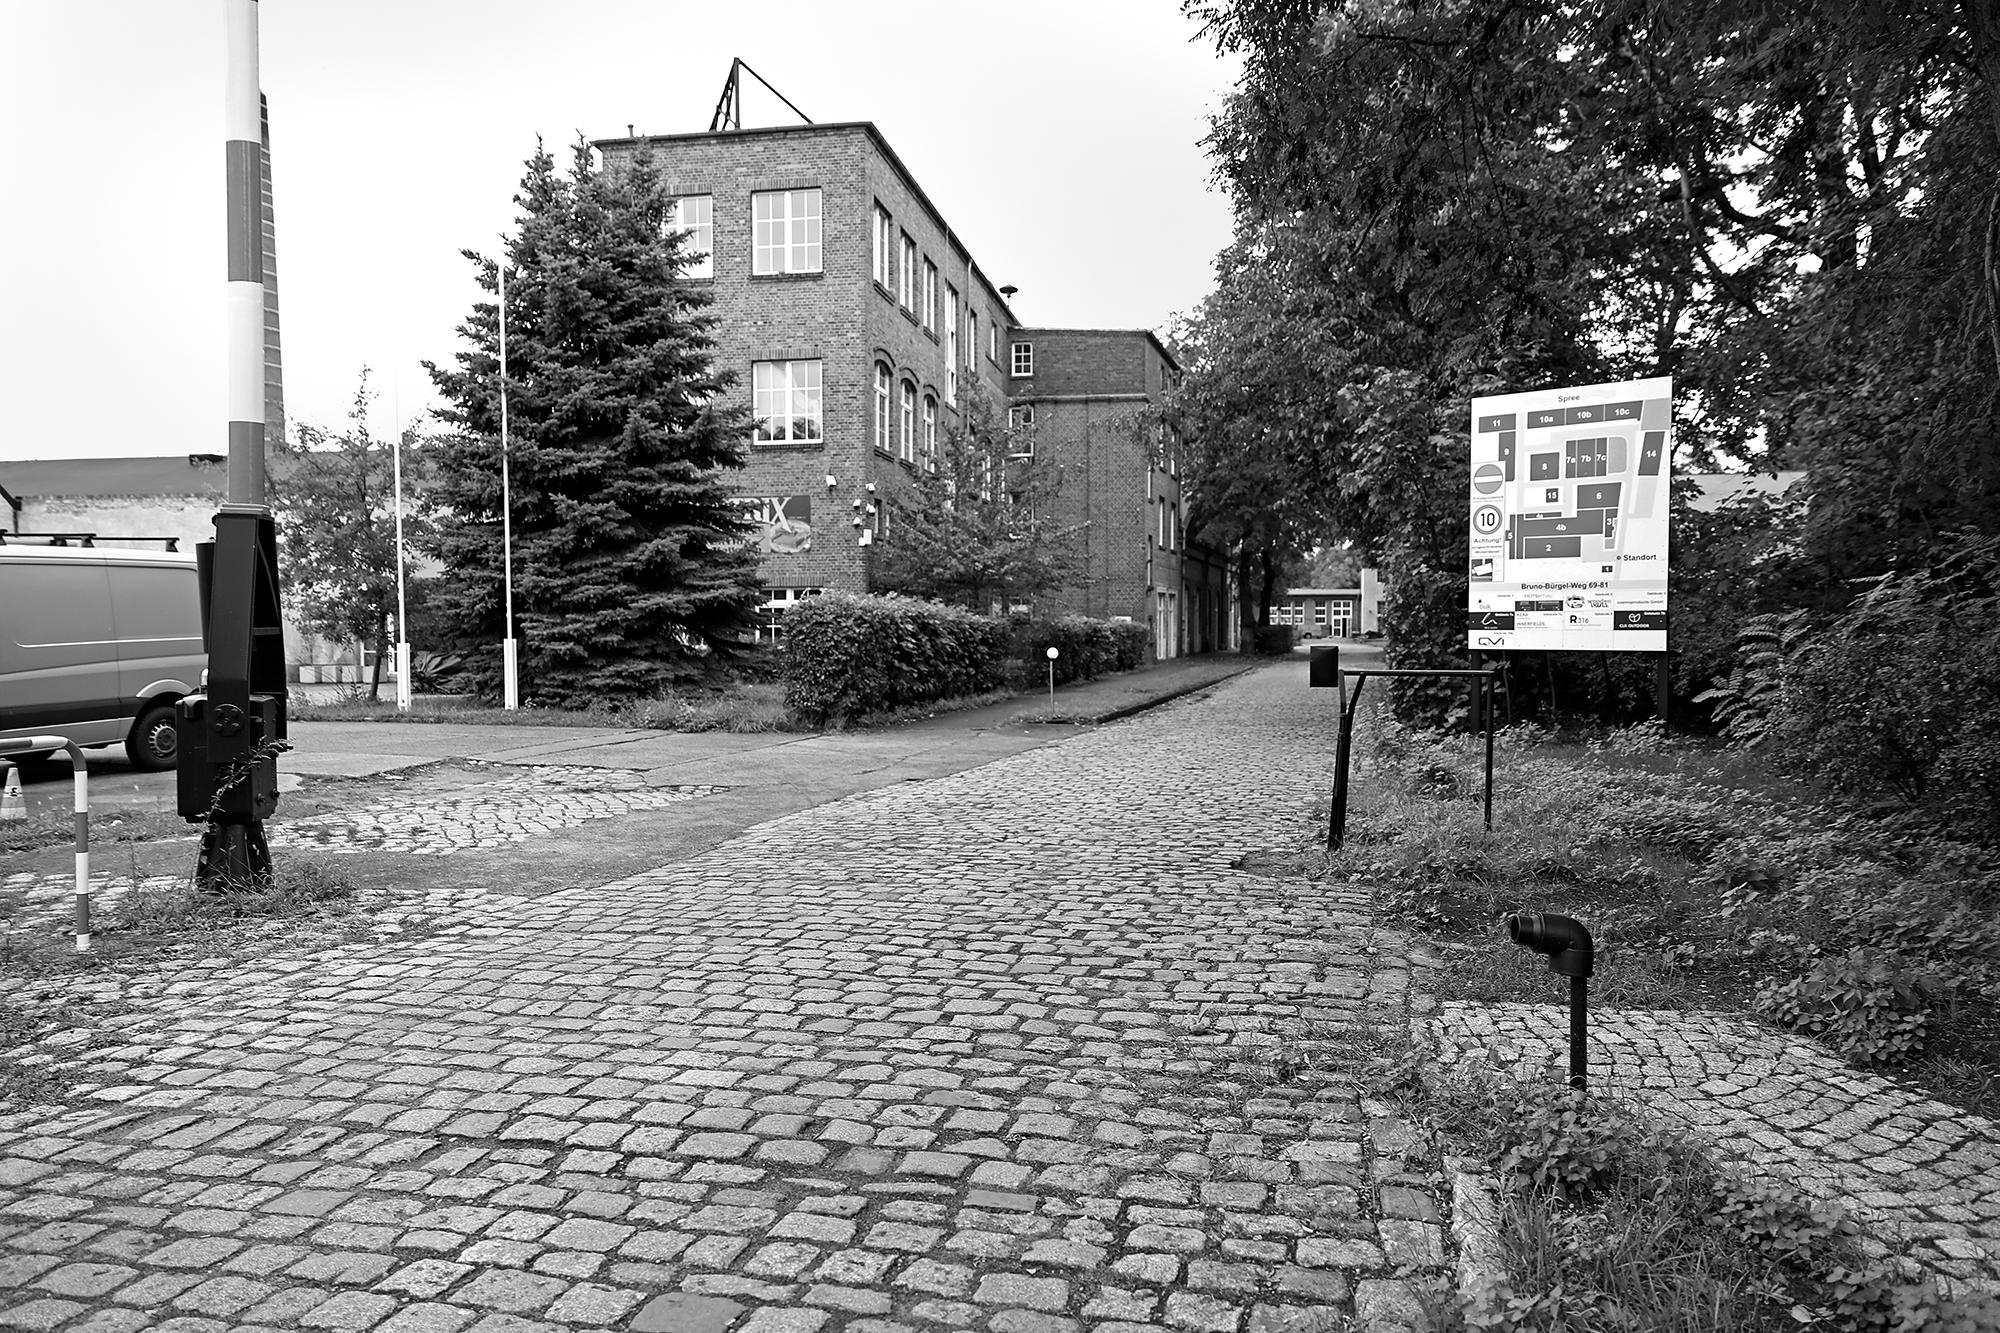 Bruno-Bürgel-Weg Nr. 71 – Der erste Standort des Studiengangs Puppenspiel an der HfS Ernst Busch Berlin